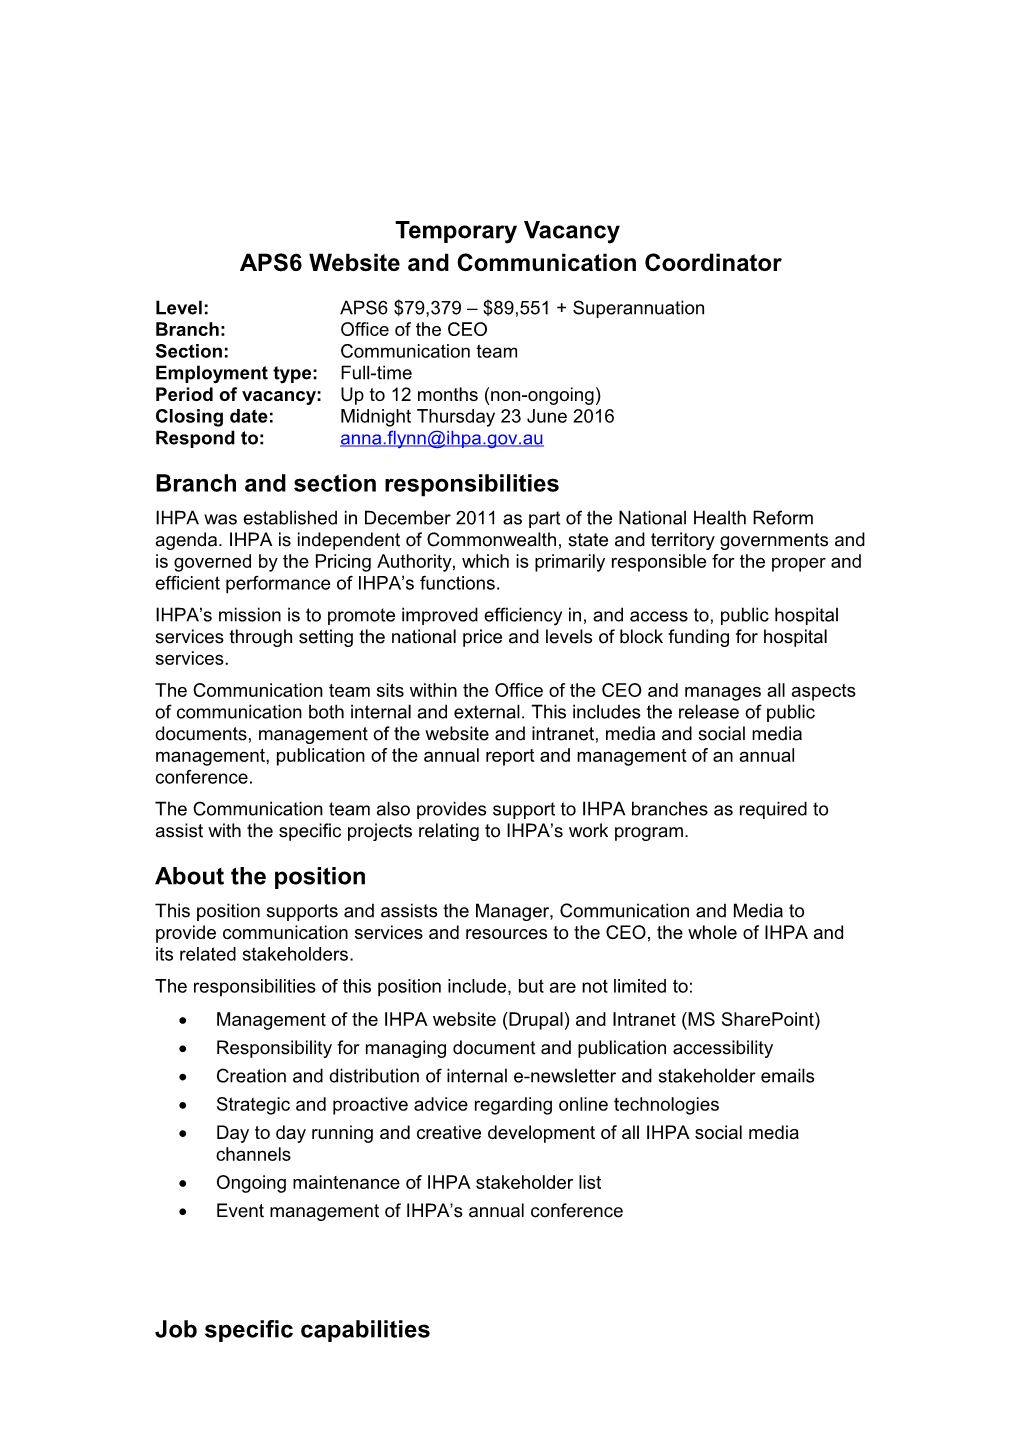 APS6 Website and Communication Coordinator